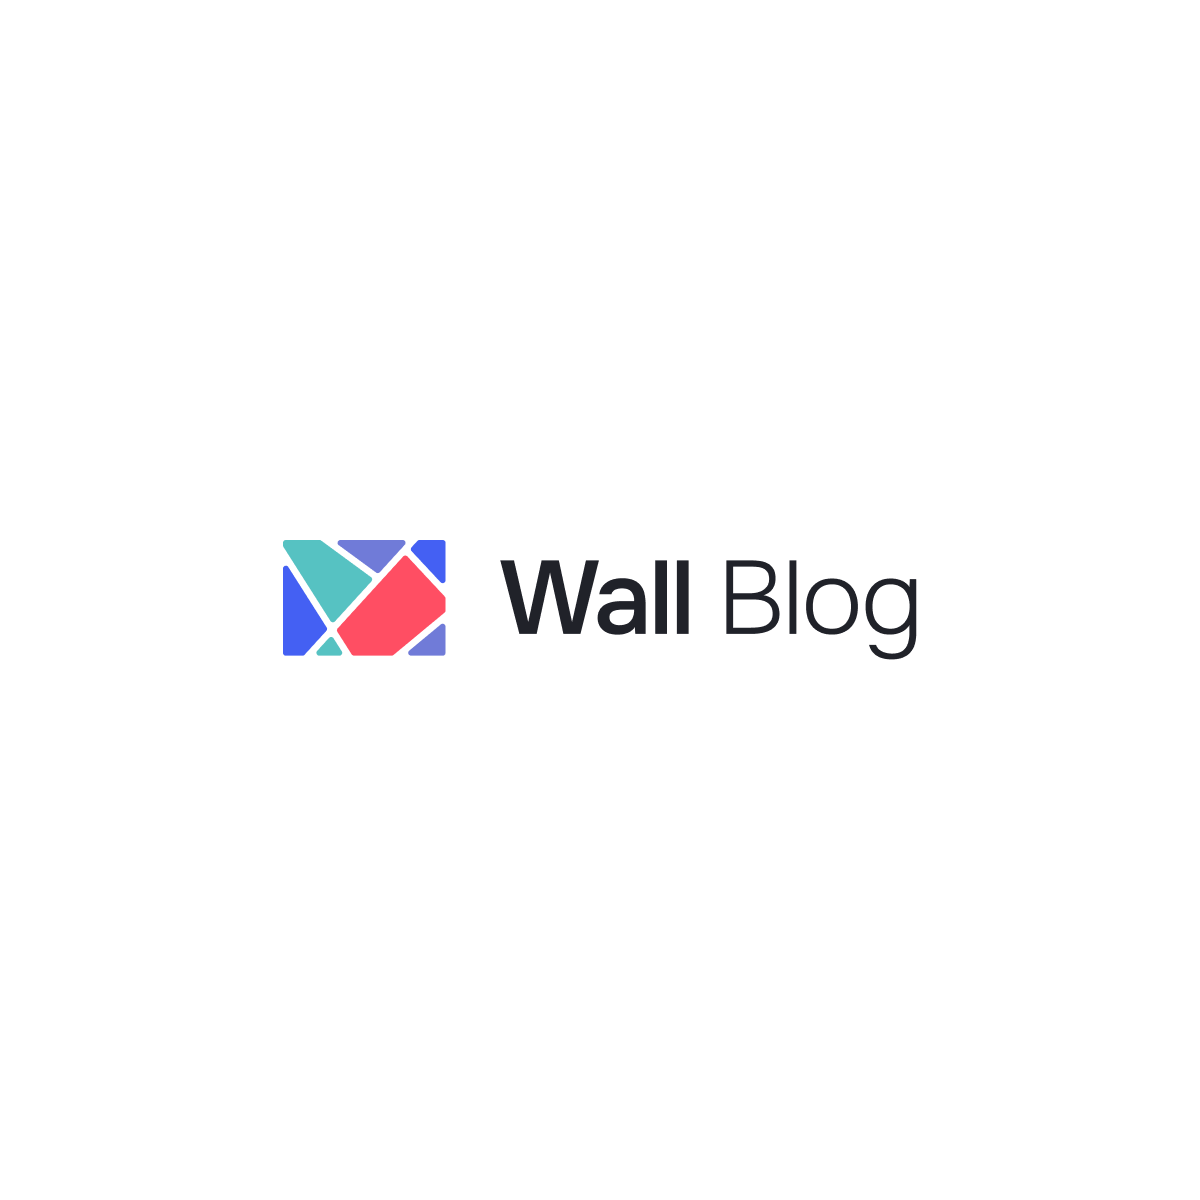 Blog - Wall Blog